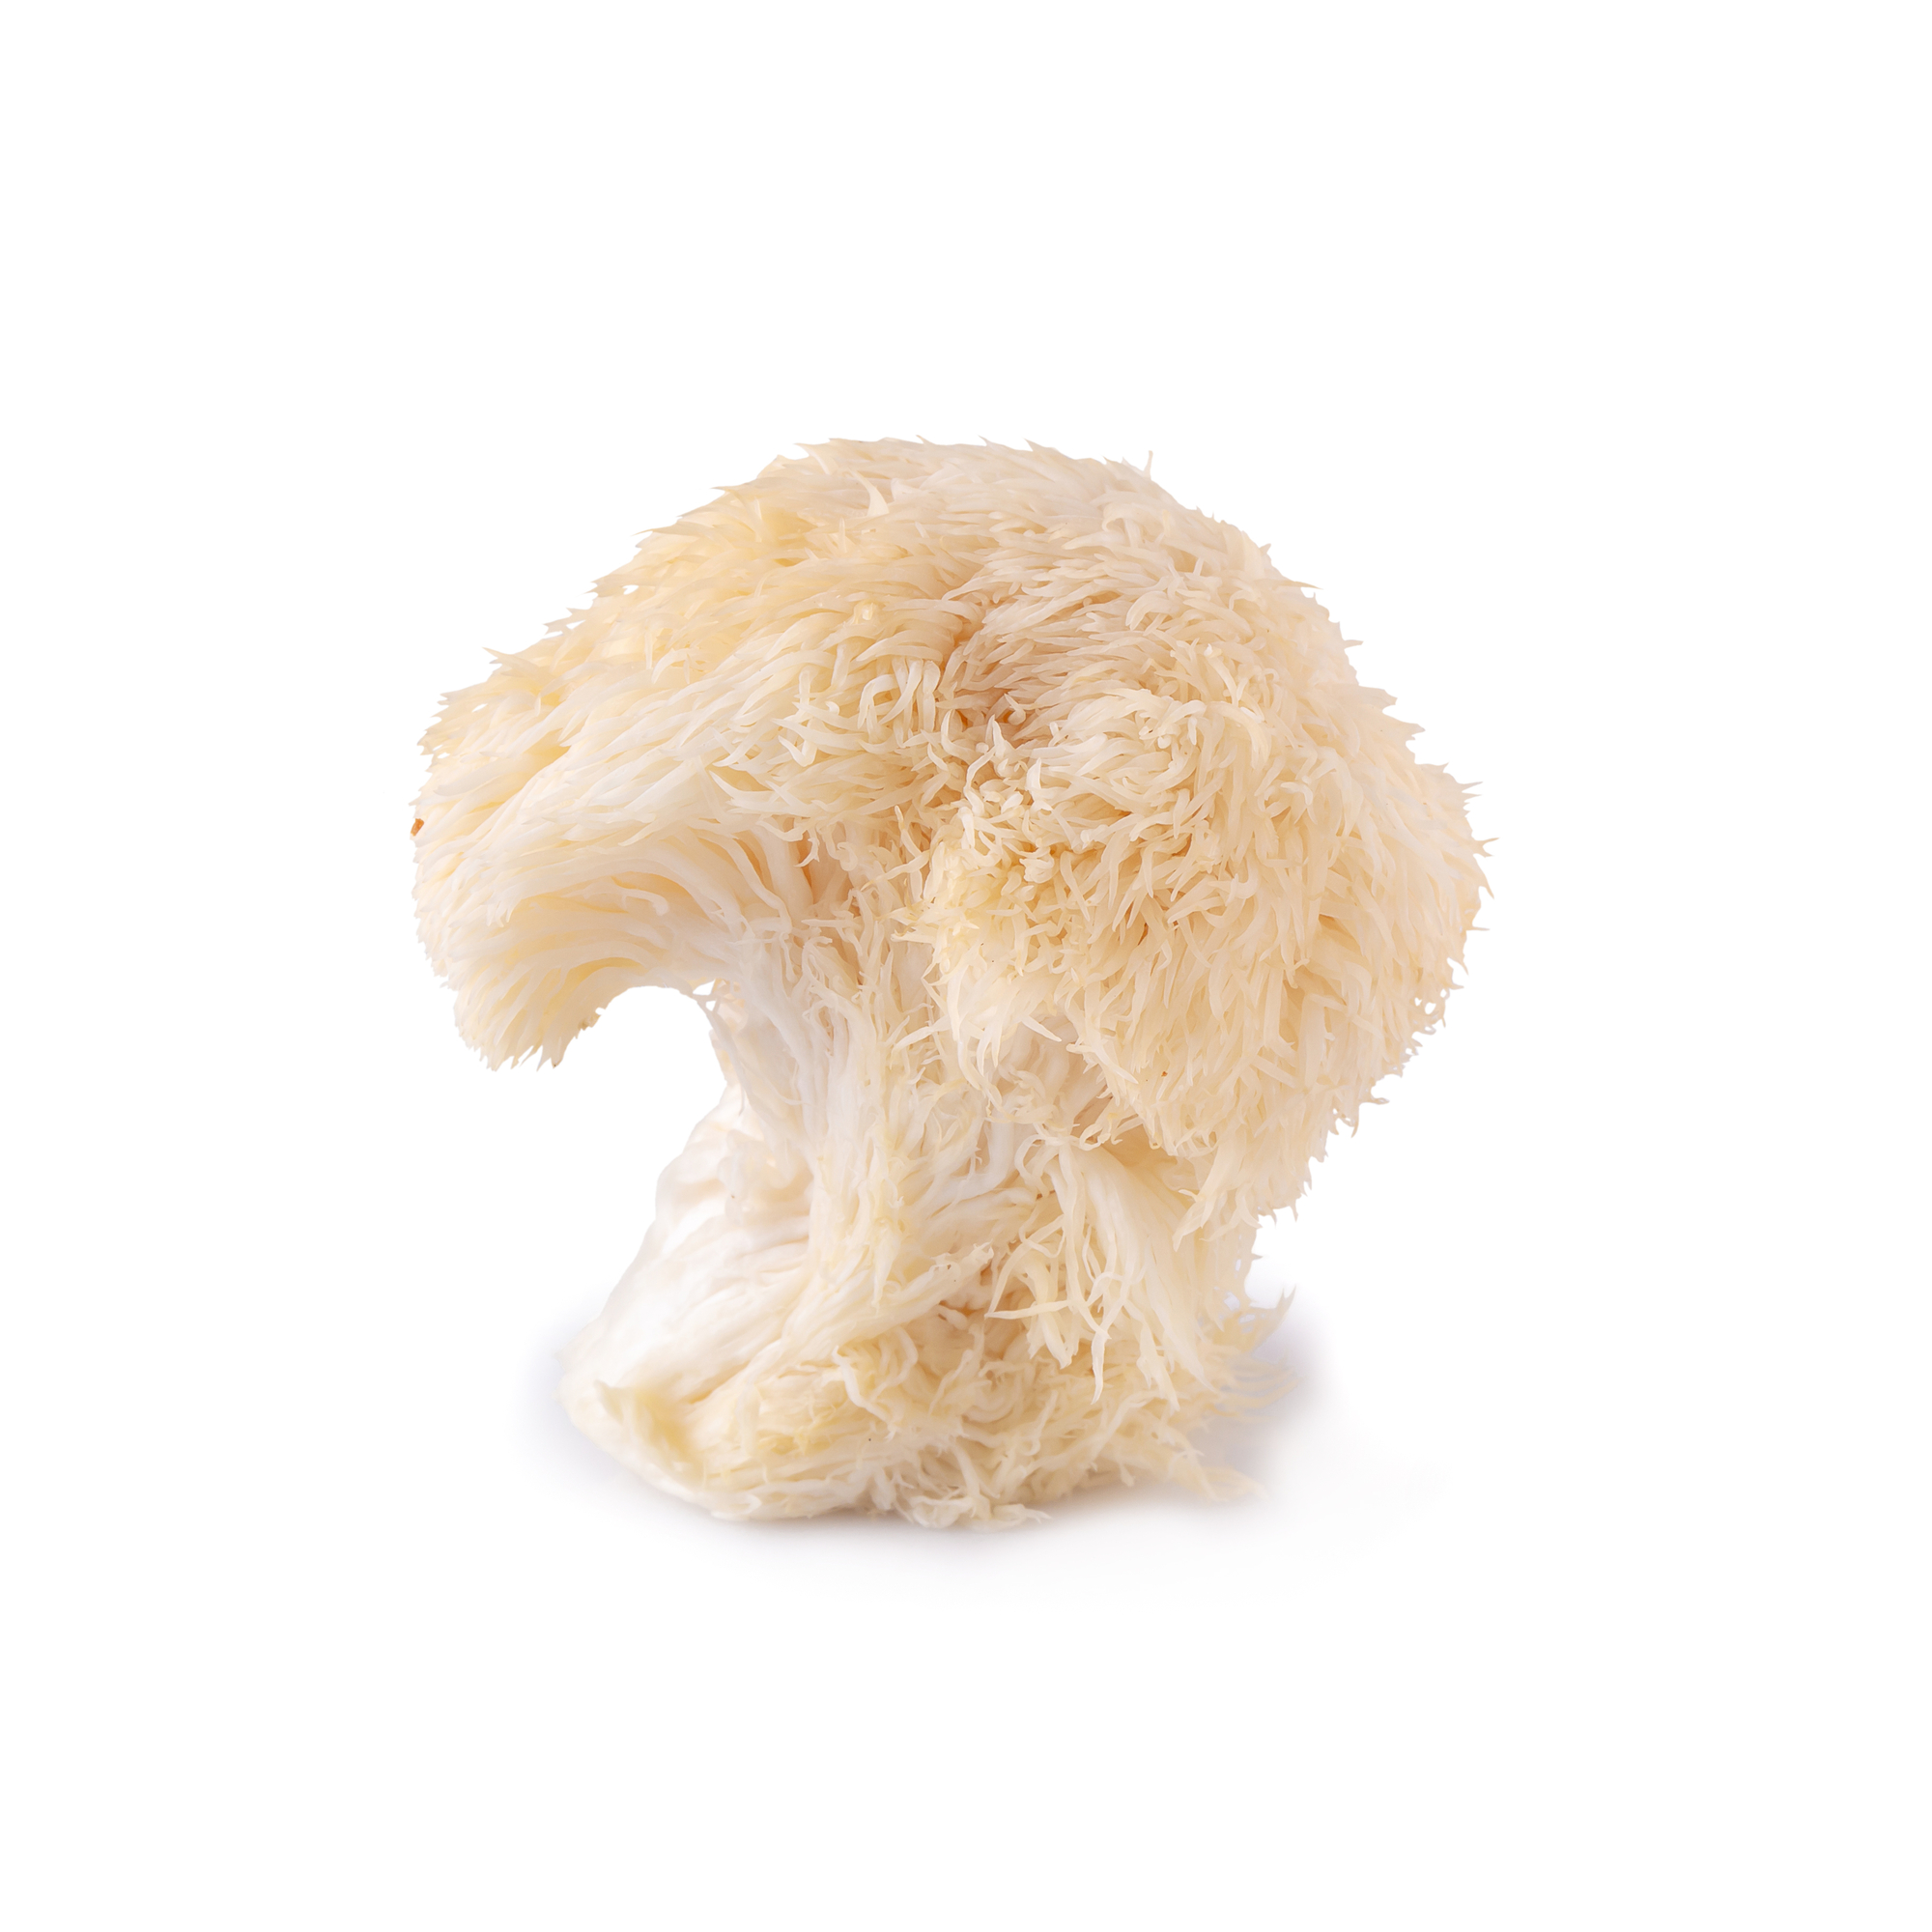 Lion's mane mushroom, lion's mane medicinal mushroom